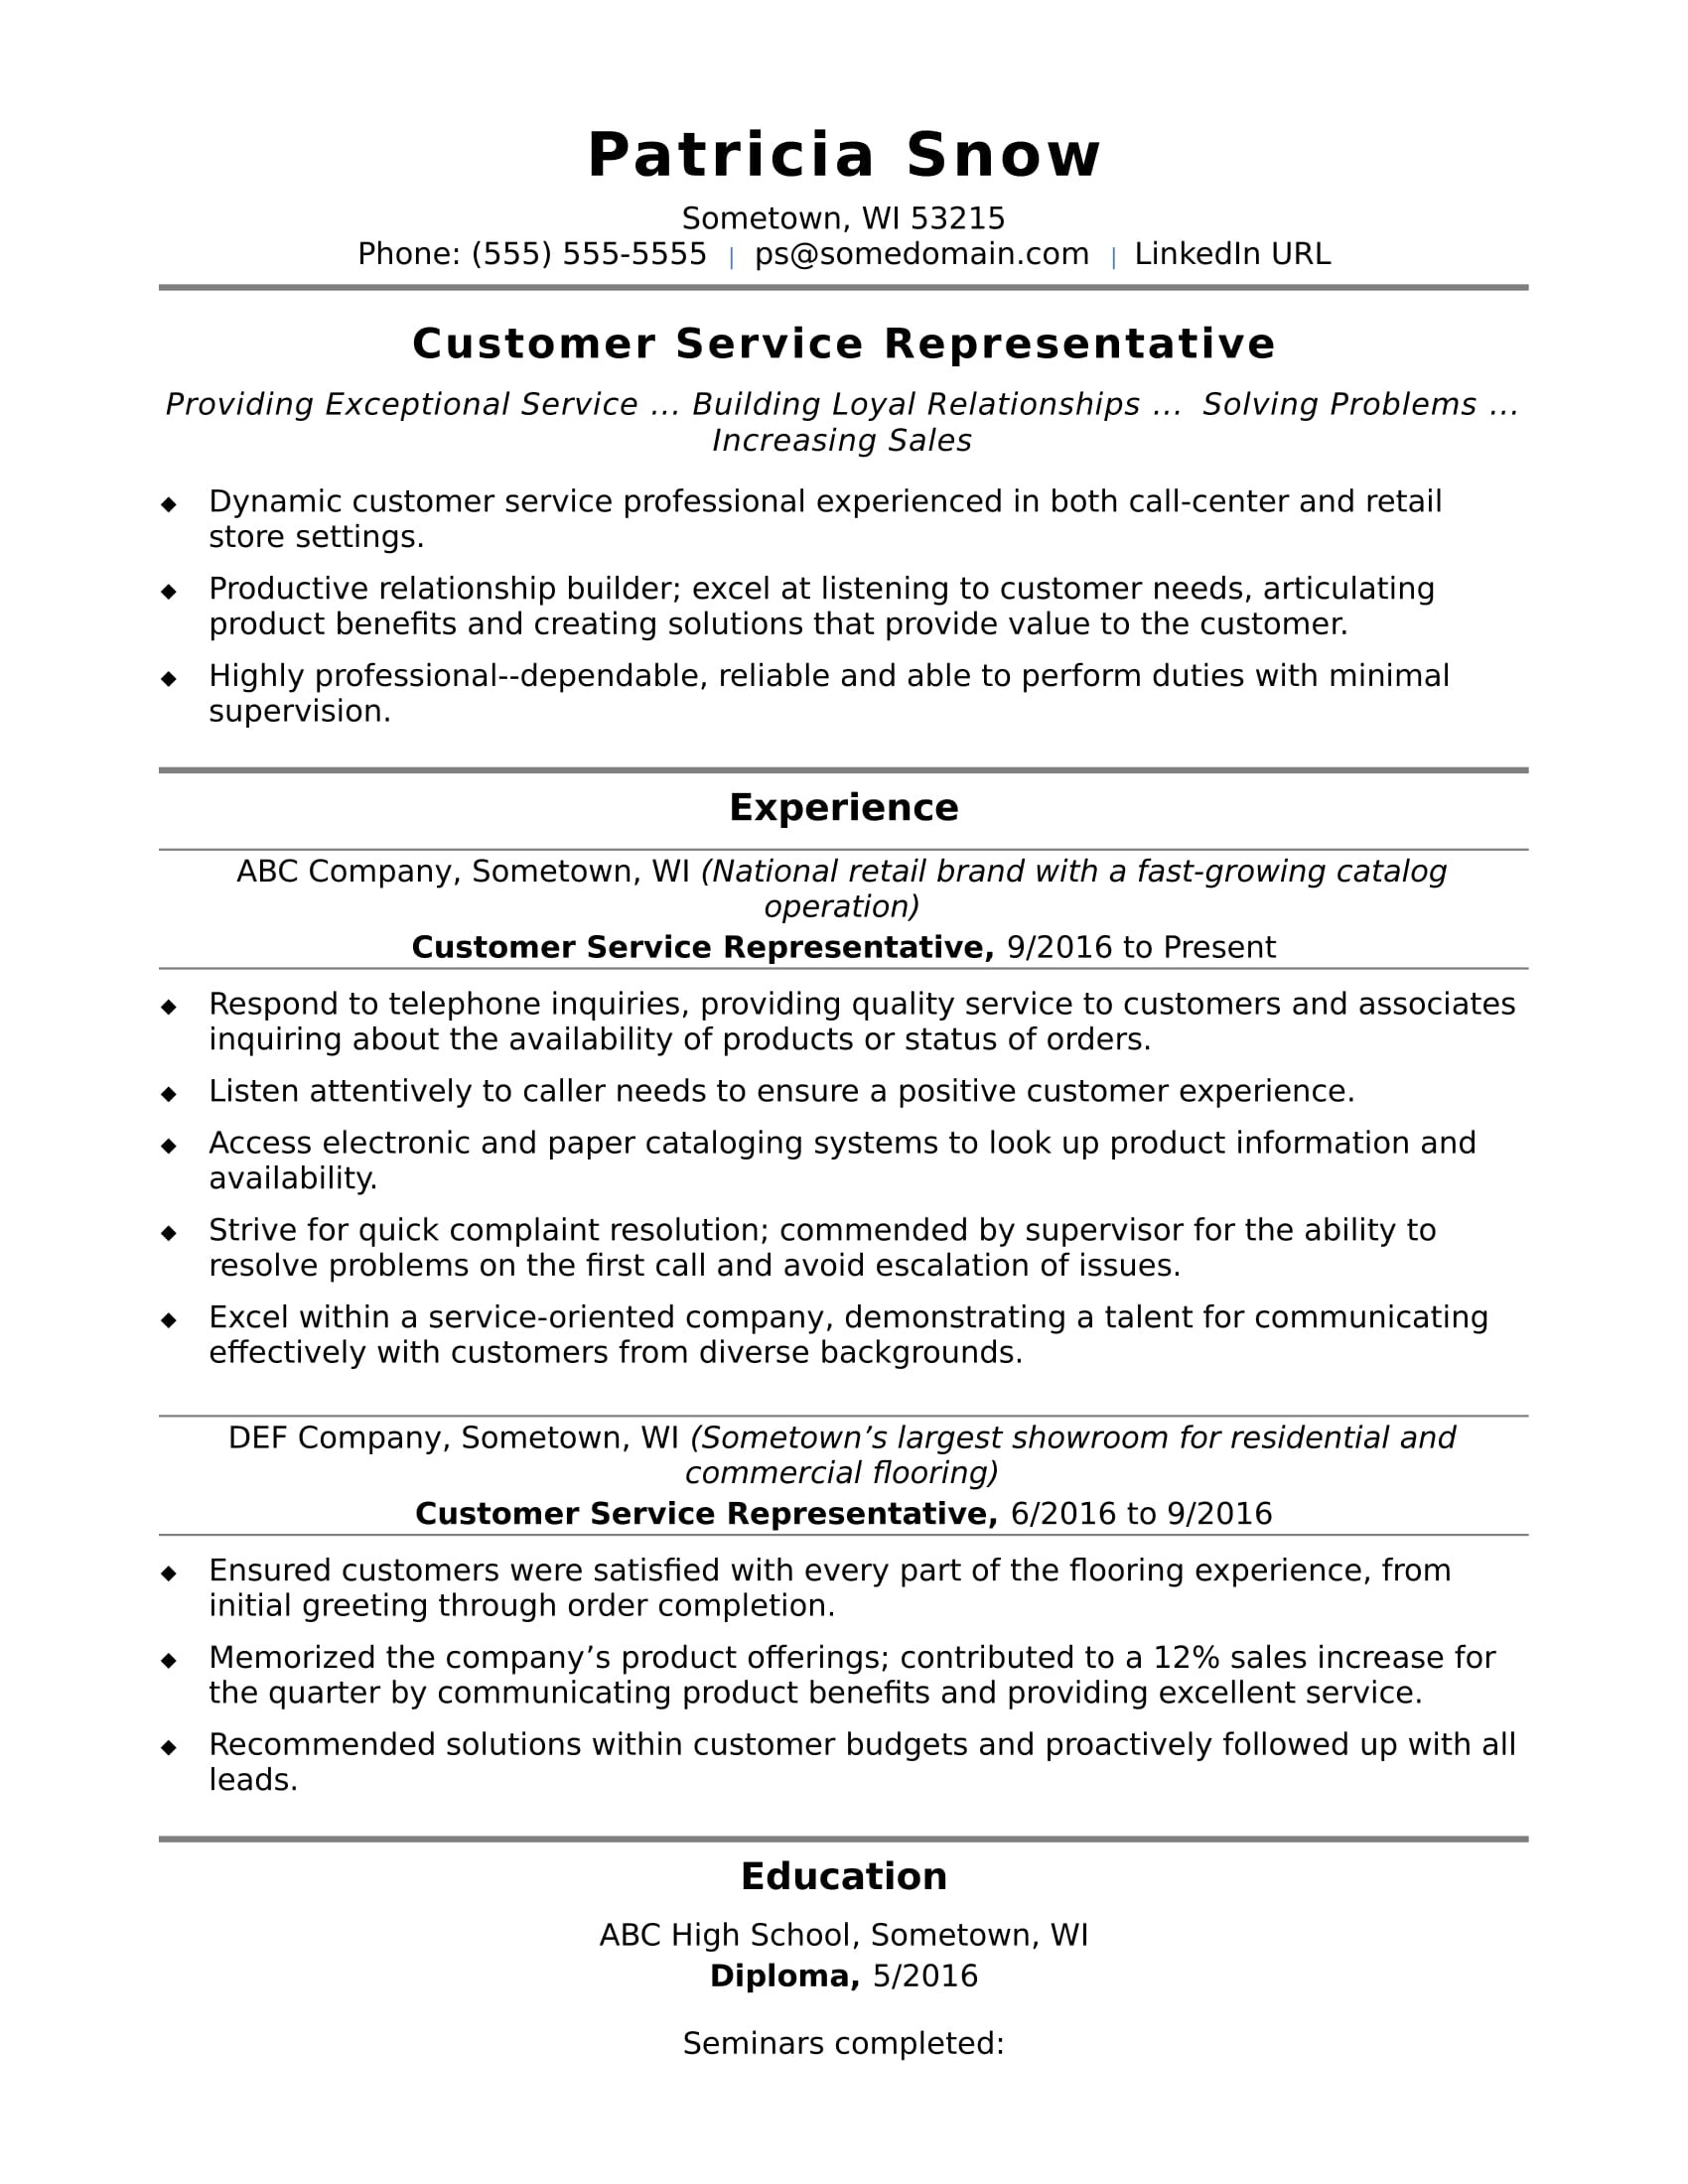 Sample Resume Customer Service Sales associate Entry-level Customer Service Resume Sample Monster.com